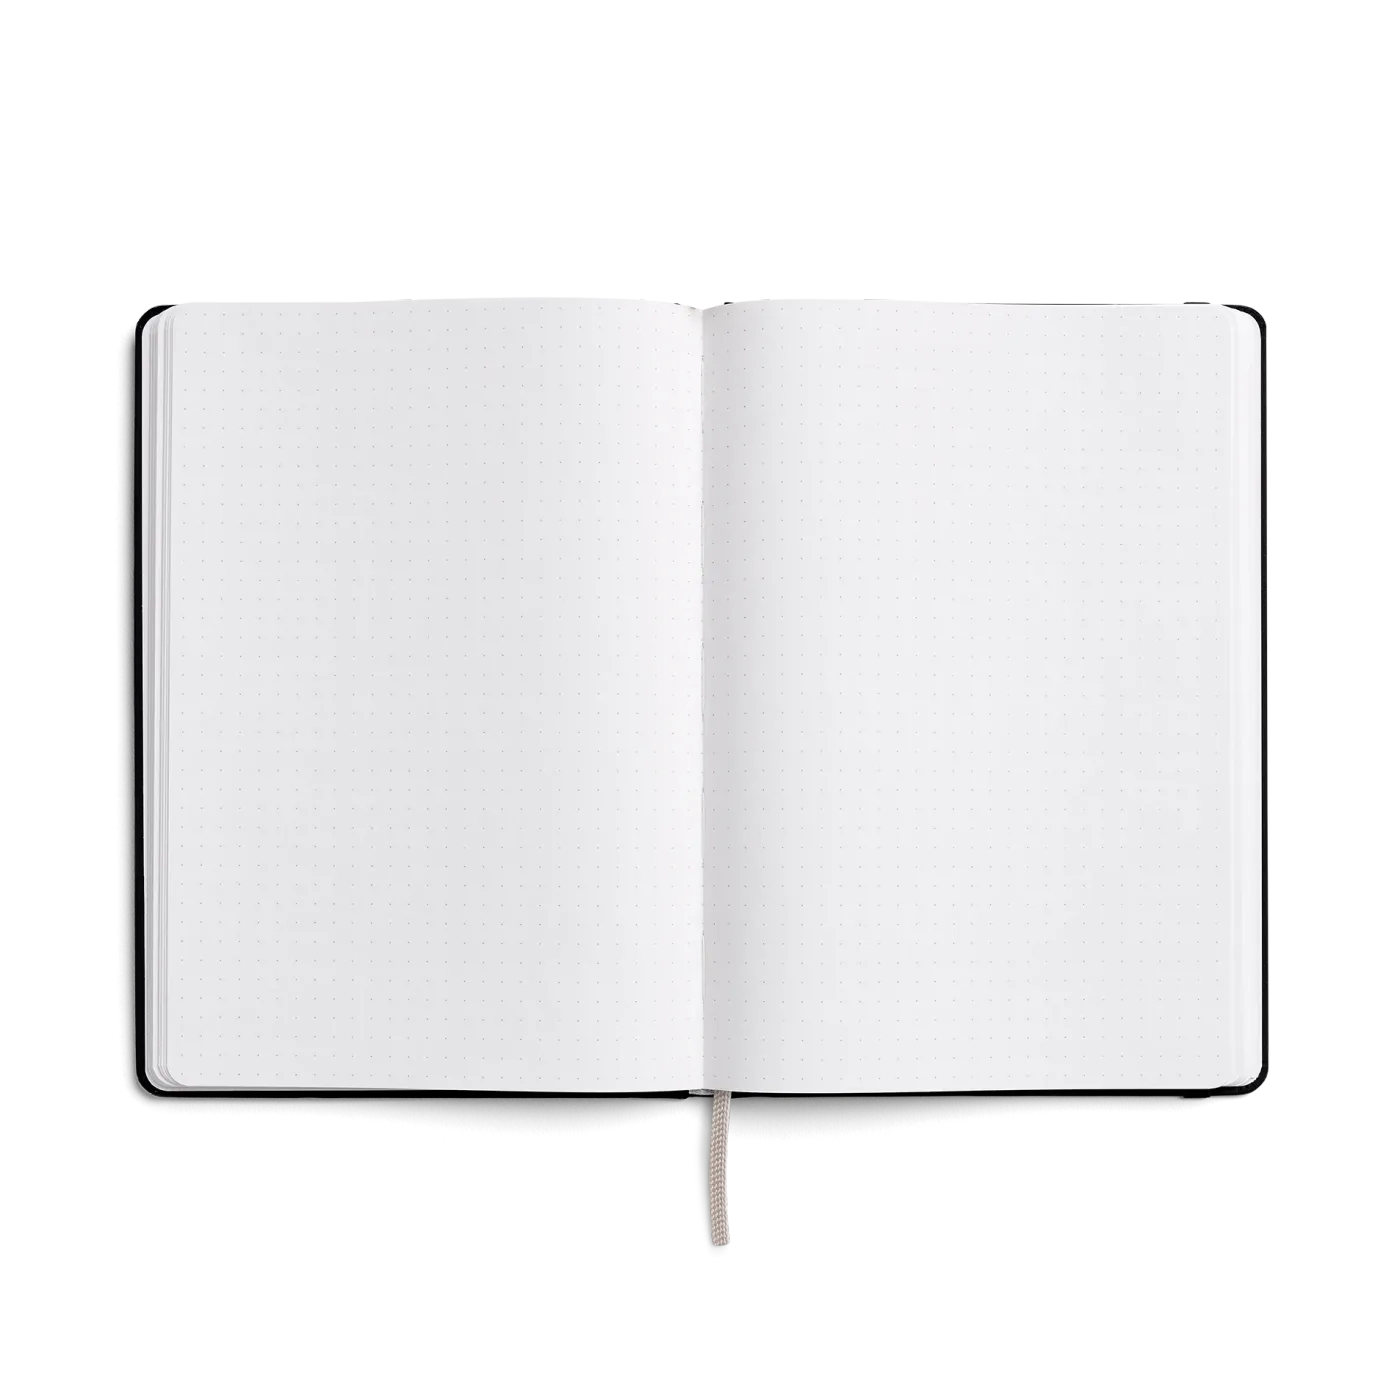 Karst Notebook A5 Hardcover - Black (Dotted)